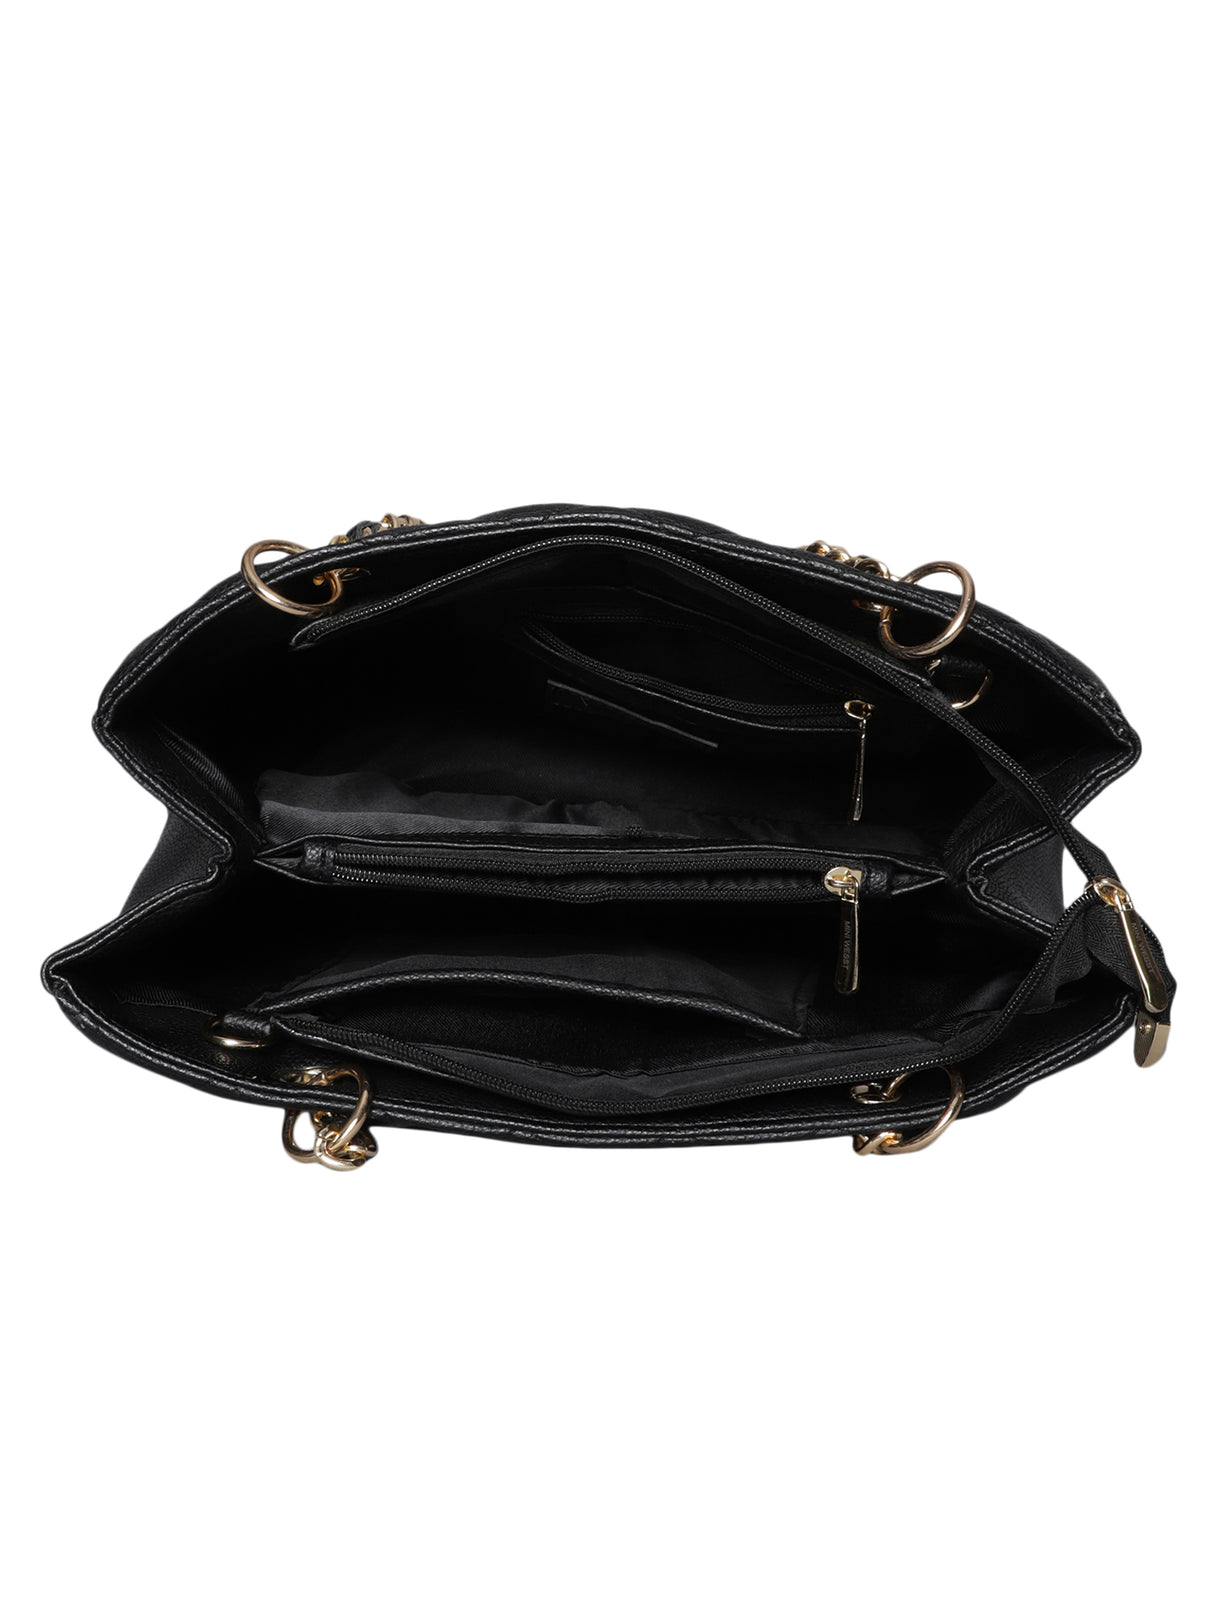 Women's Black Handbags